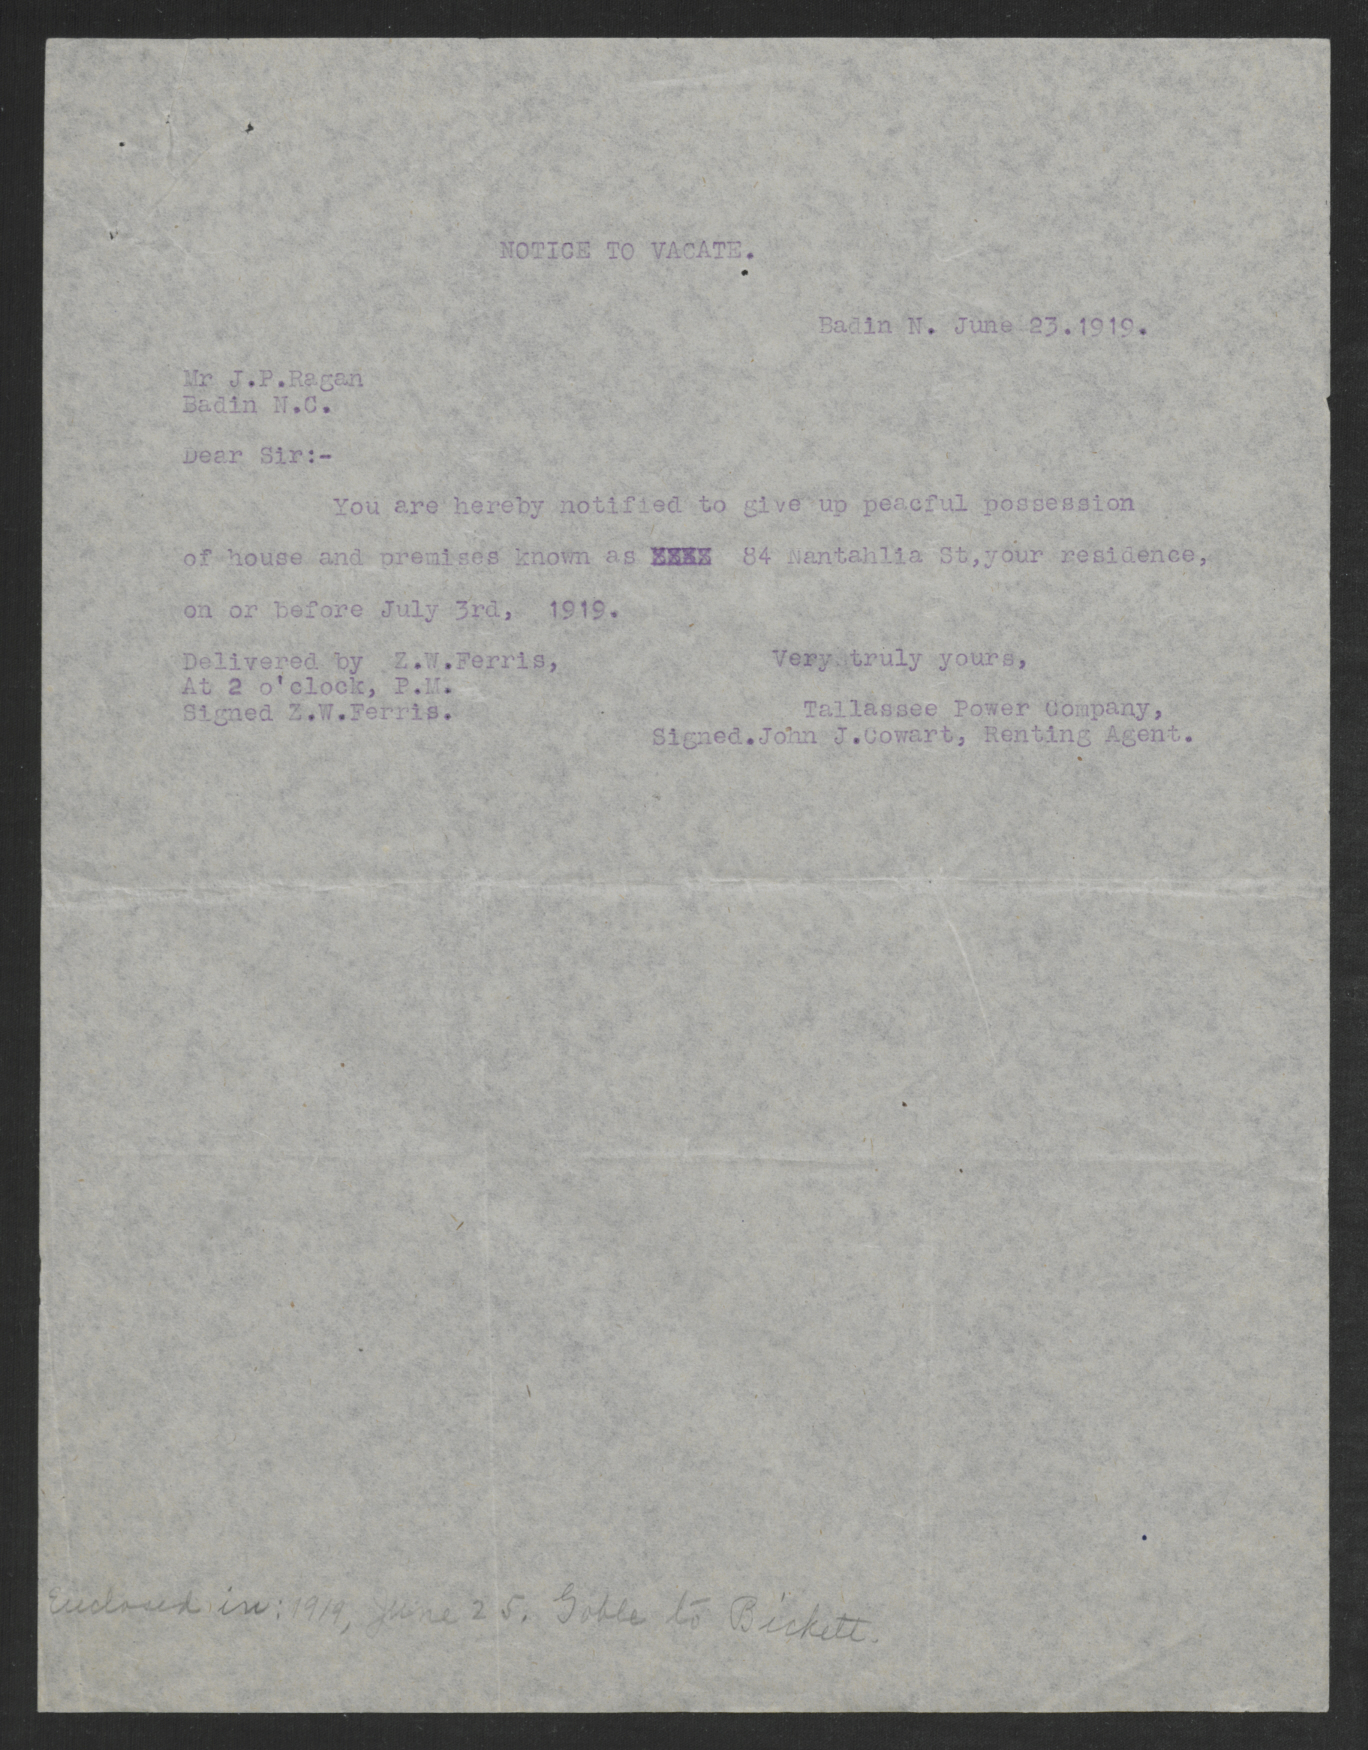 Letter from John J. Cowart to John P. Ragan, June 23, 1919